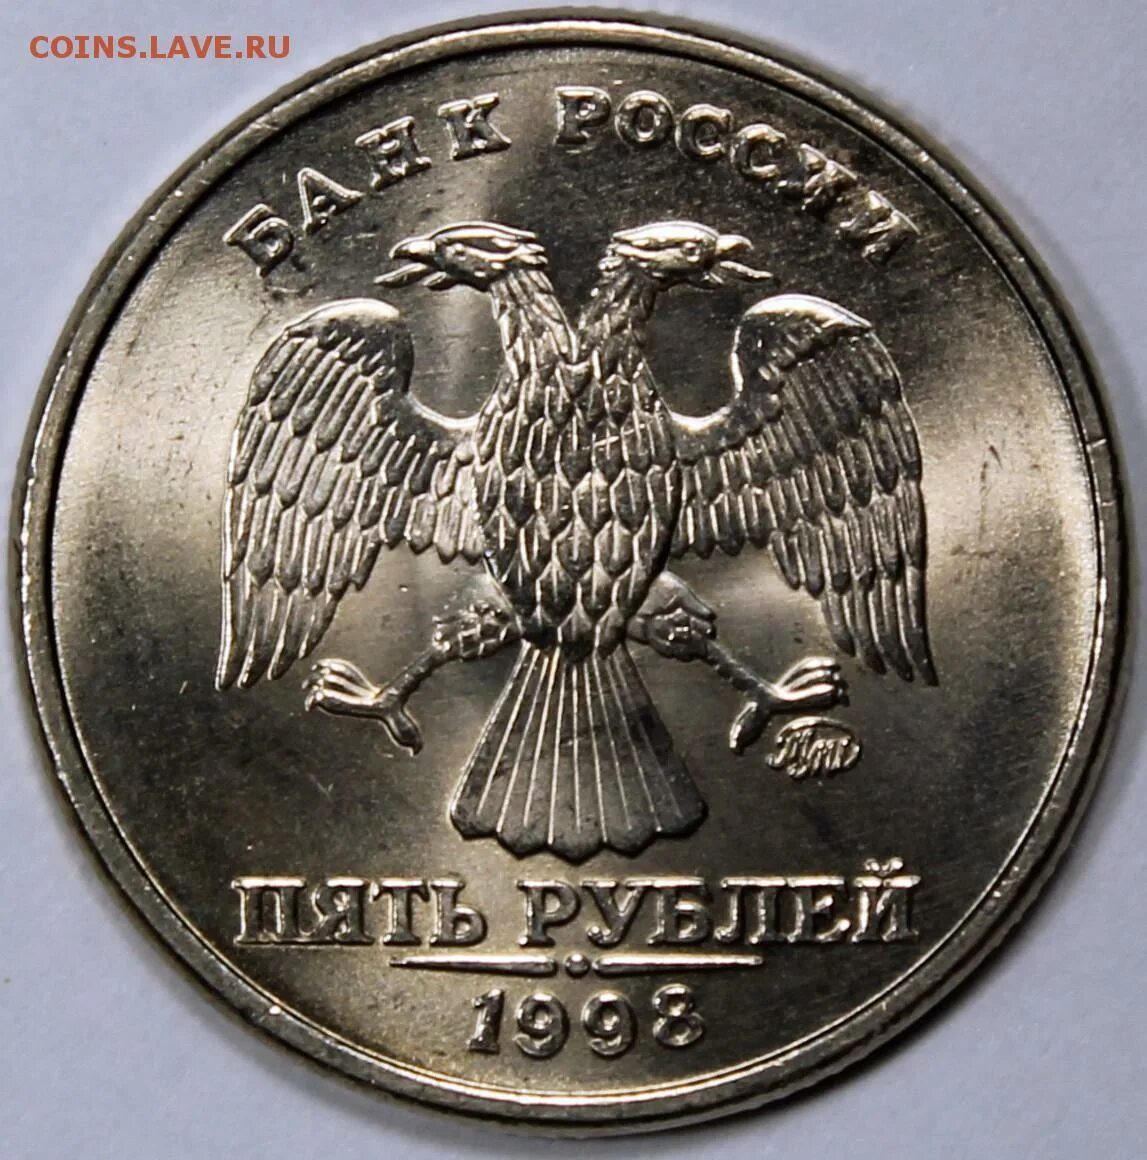 5 рублей 98. 5 Рублей 98 ММД. 5 Рублей 1998 UNC. 5 Рублей 1998 ММД. 5 Рублей 1998 года в черном цвете.